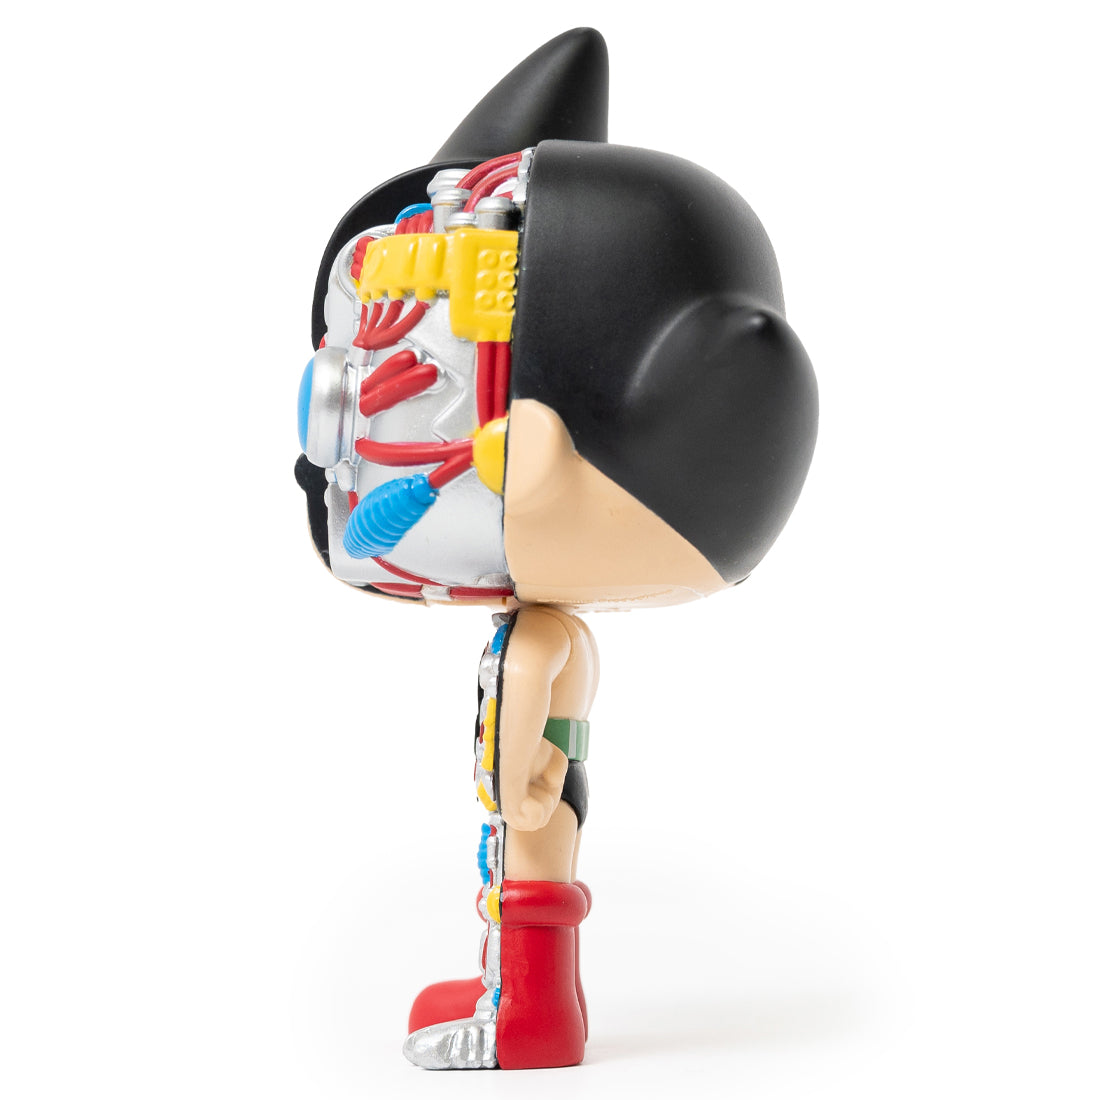 BAIT x Funko POP Animation Astro Boy - Astro Boy Textured (tan)